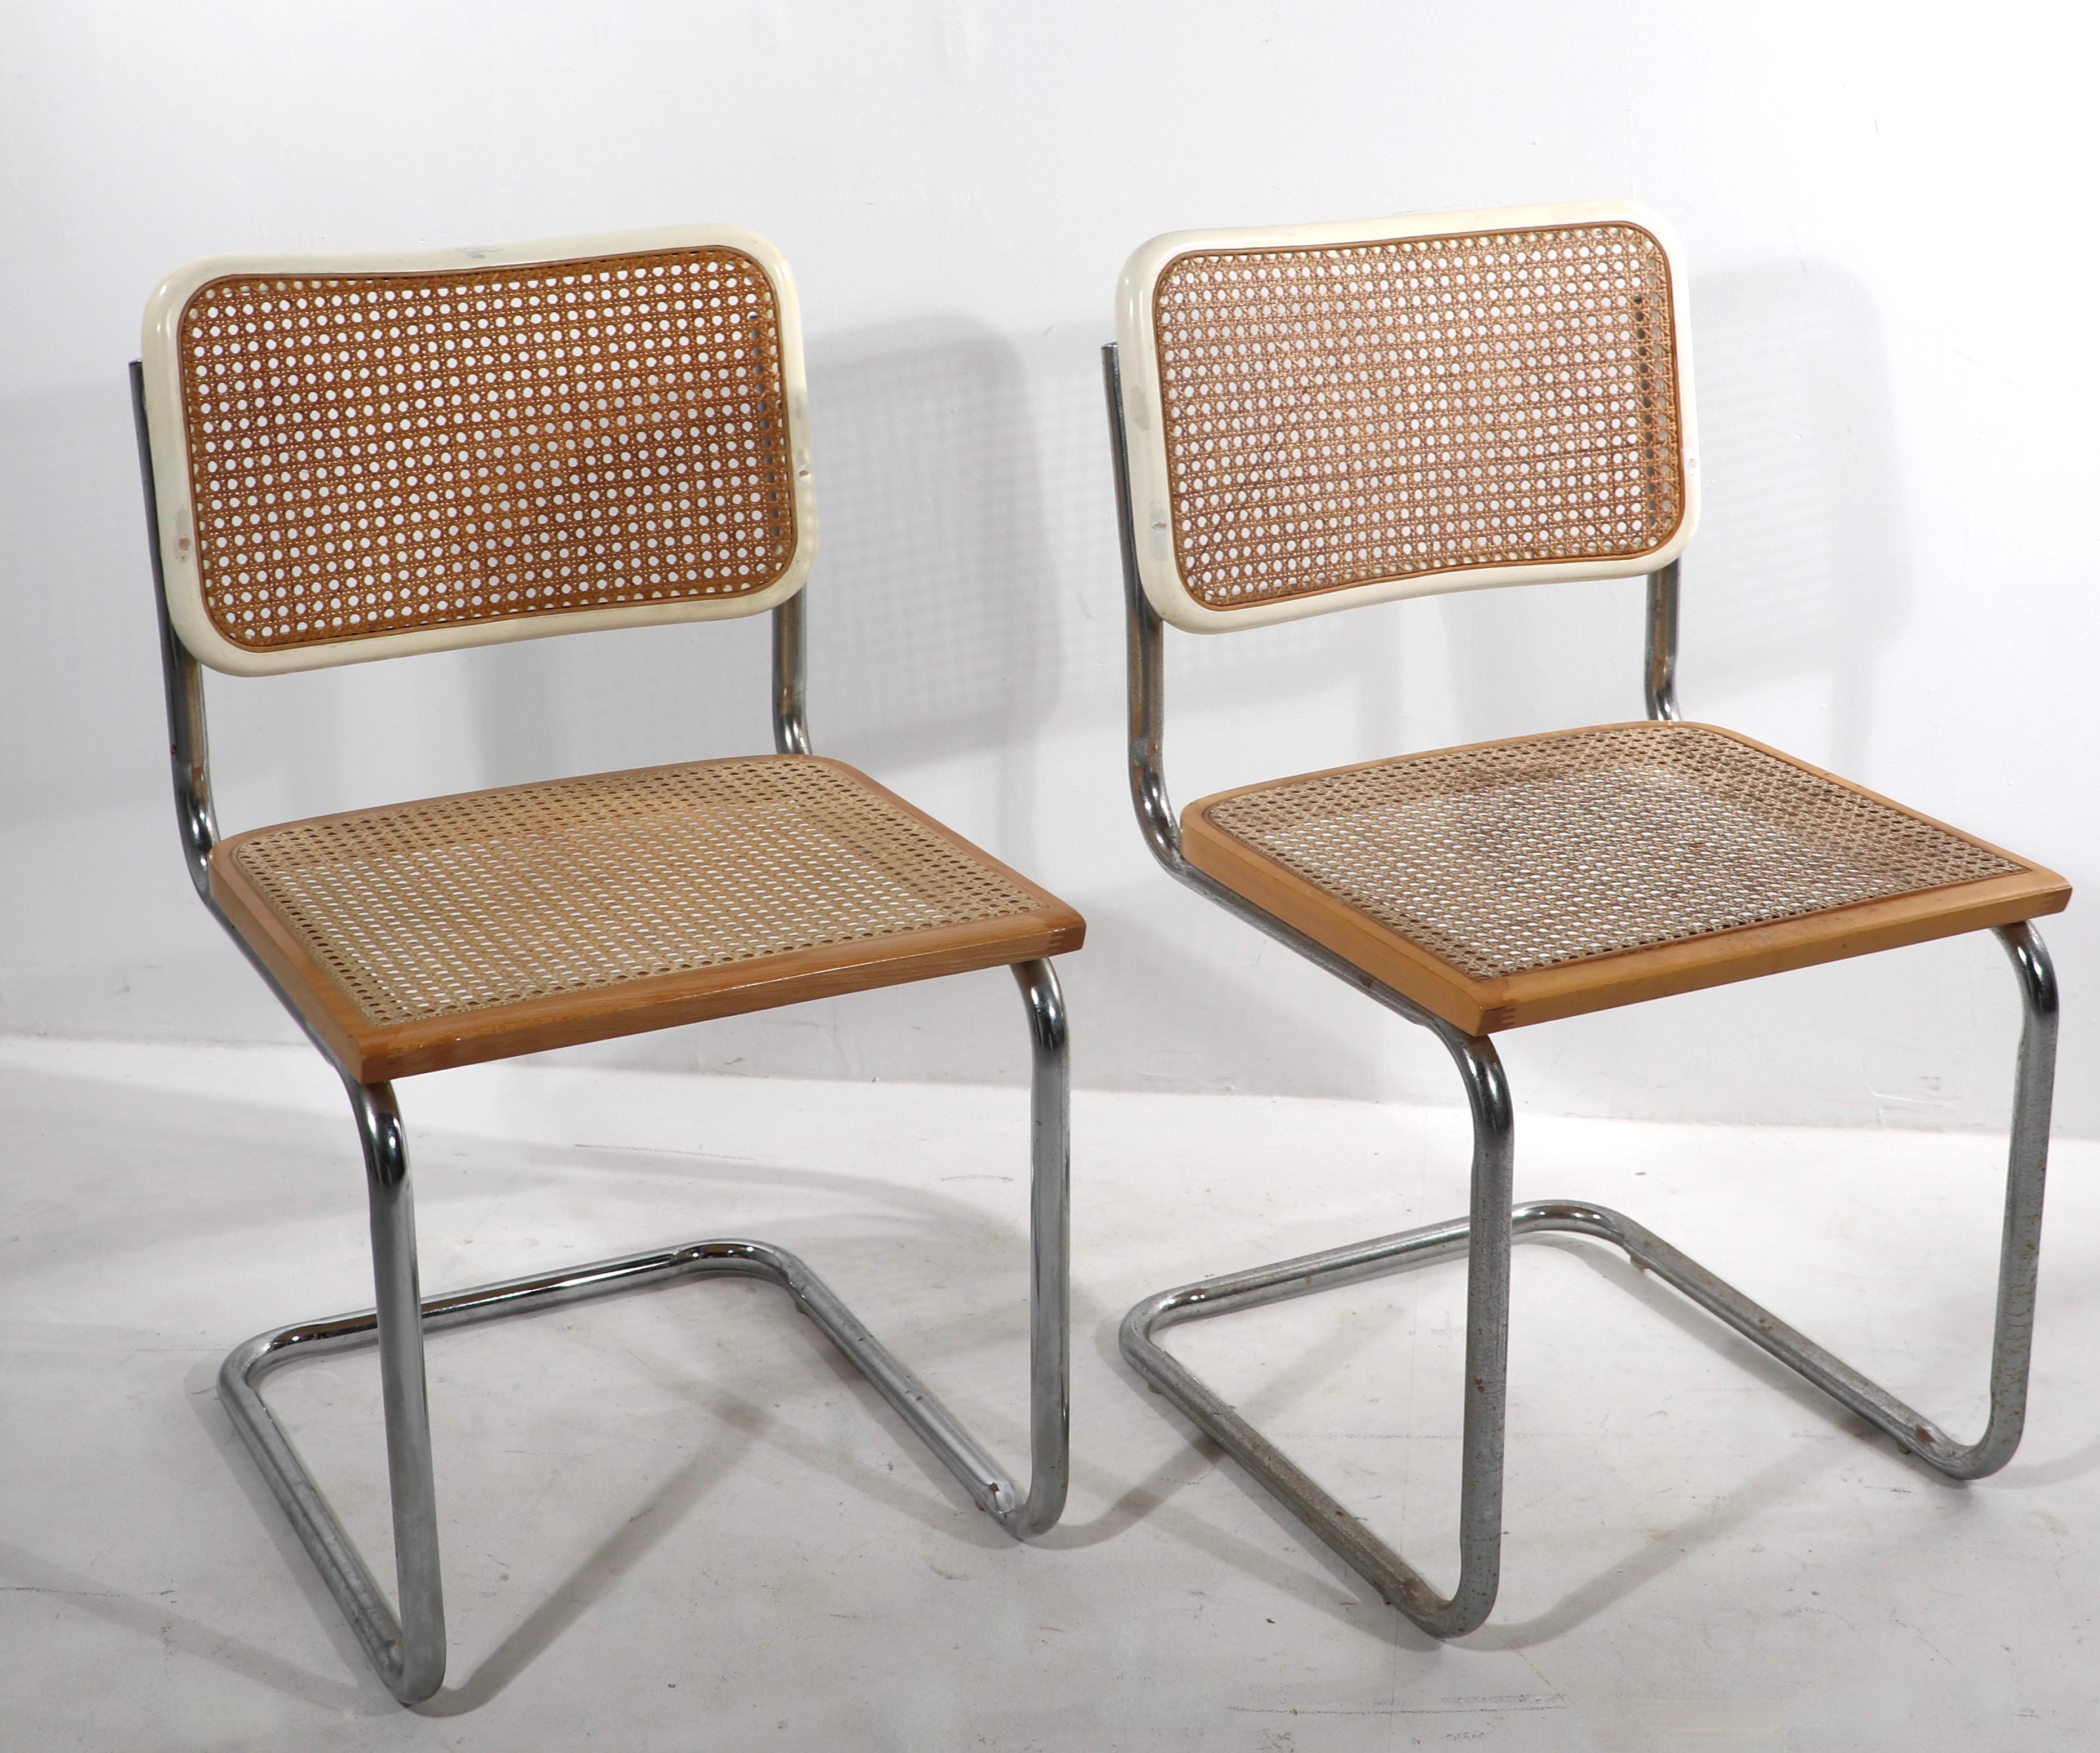 Bauhaus Pr. 1970's Cesca Dining Chairs Designed by Marcel Breuer